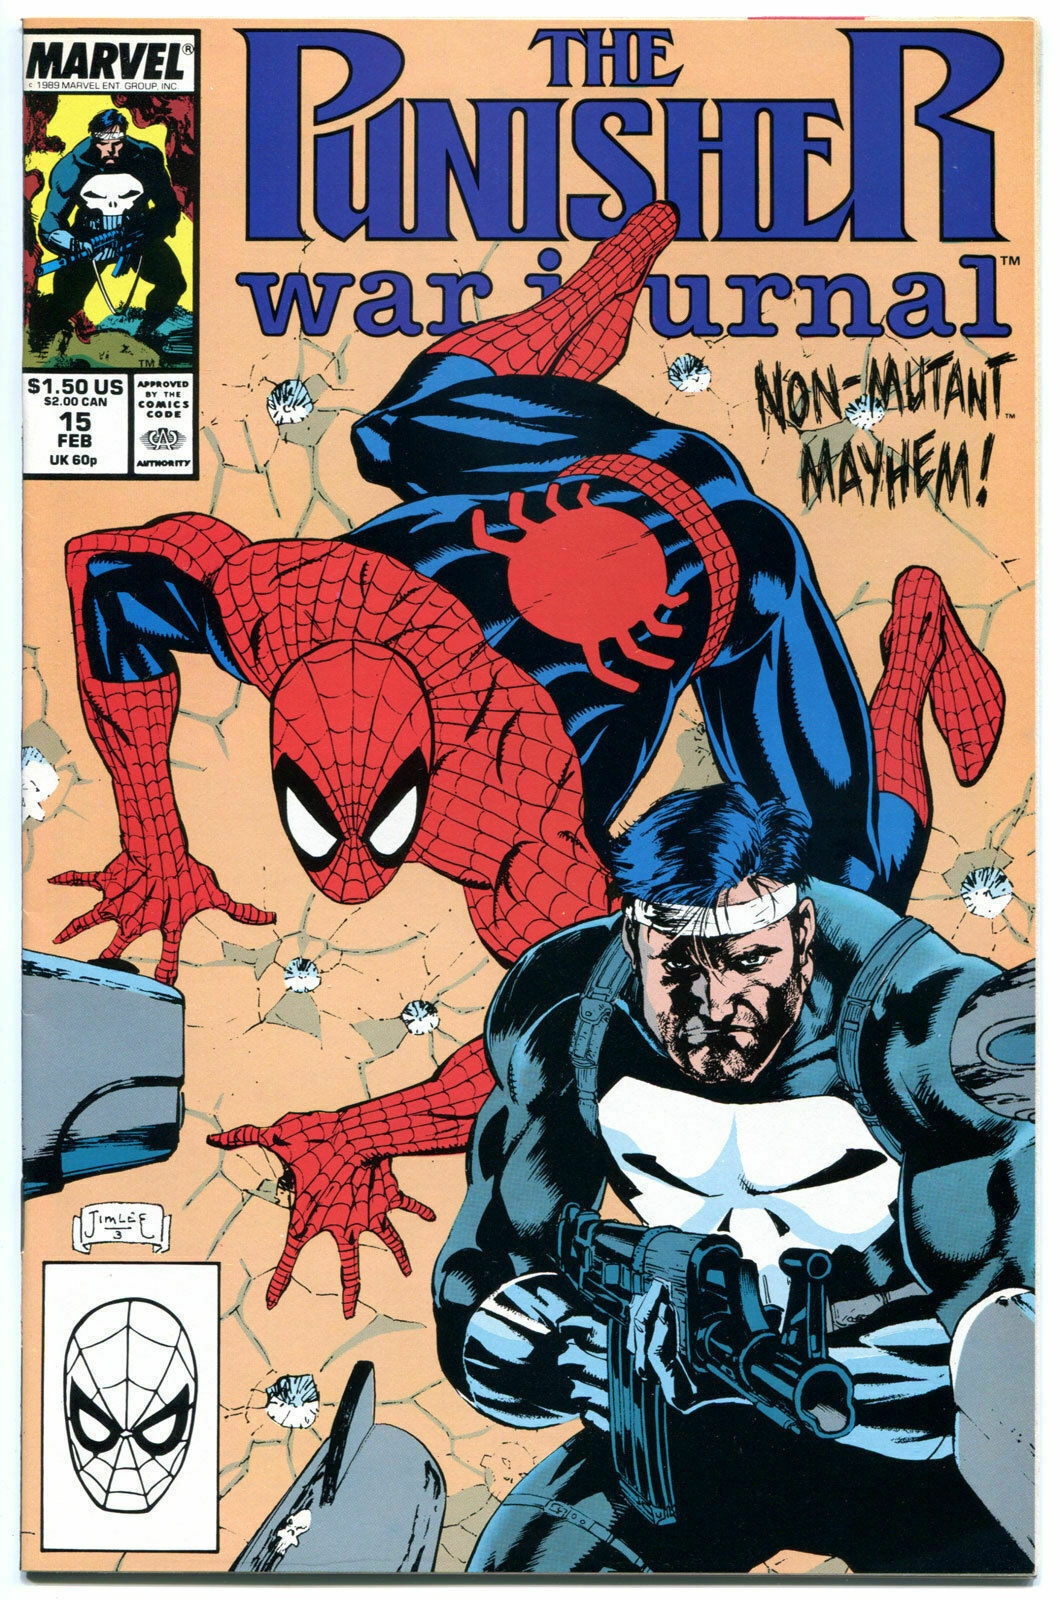 Punisher War Zone #5  Comic Books - Modern Age, Marvel, Punisher,  Superhero / HipComic